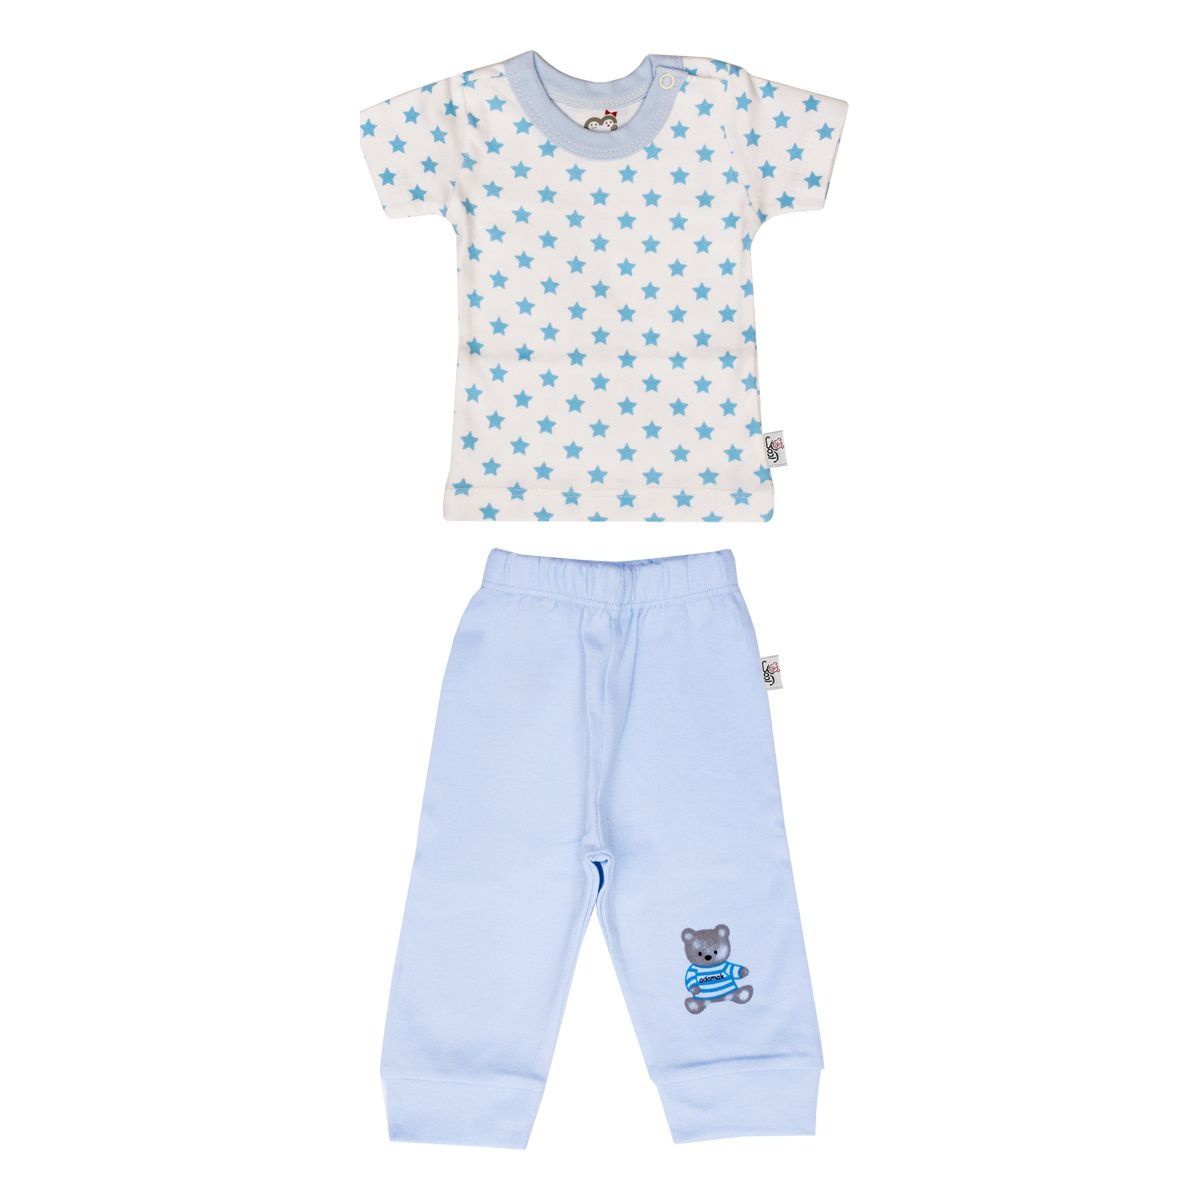 ست تی شرت و شلوار نوزادی پسرانه آدمک طرح ستاره آبی کد 01 -  - 2